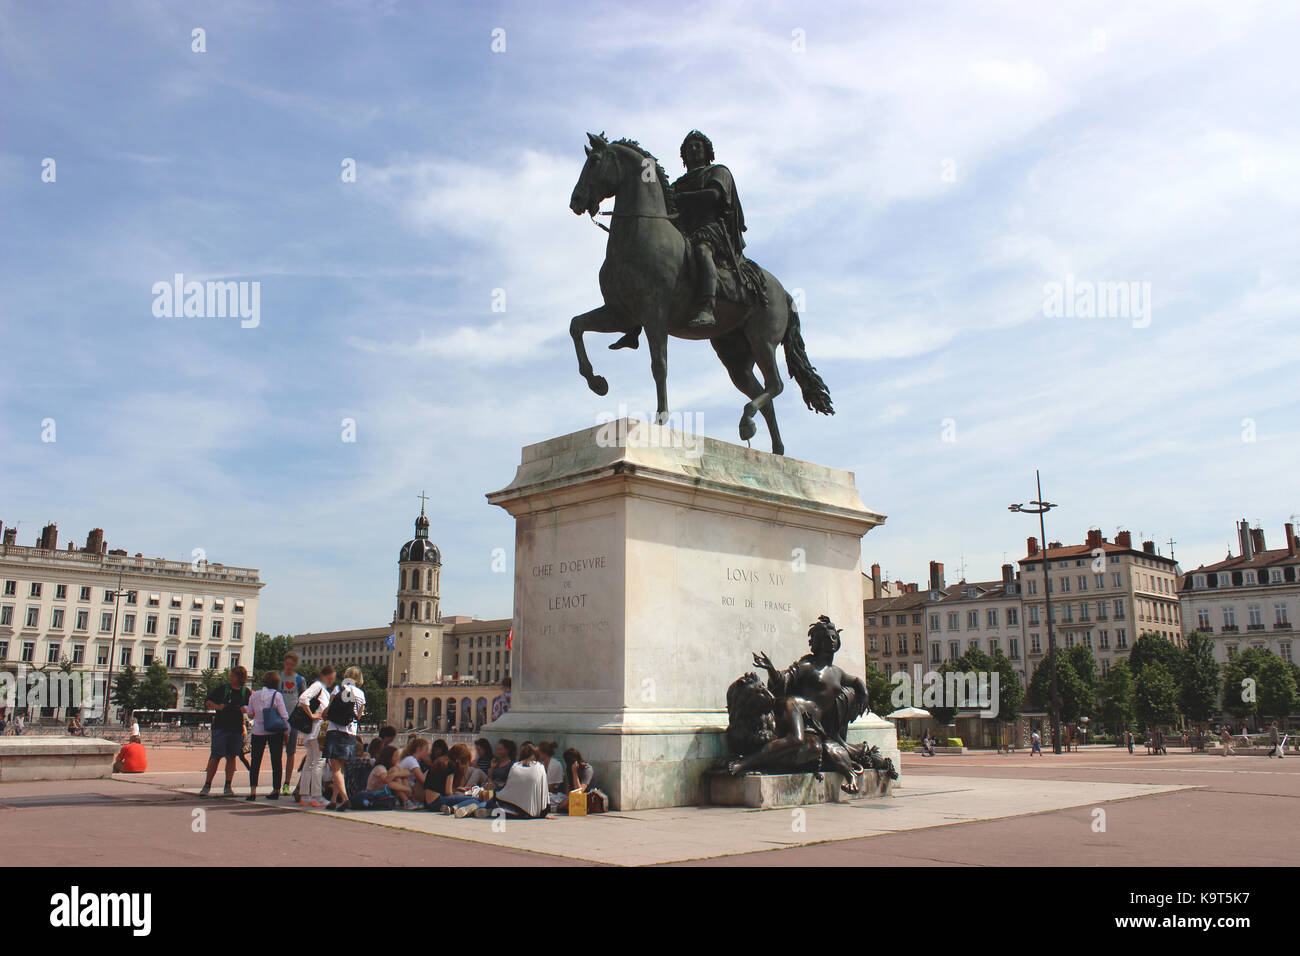 Equestrian statue of Louis XIV on Place Bellecour, Lyon, France Stock Photo